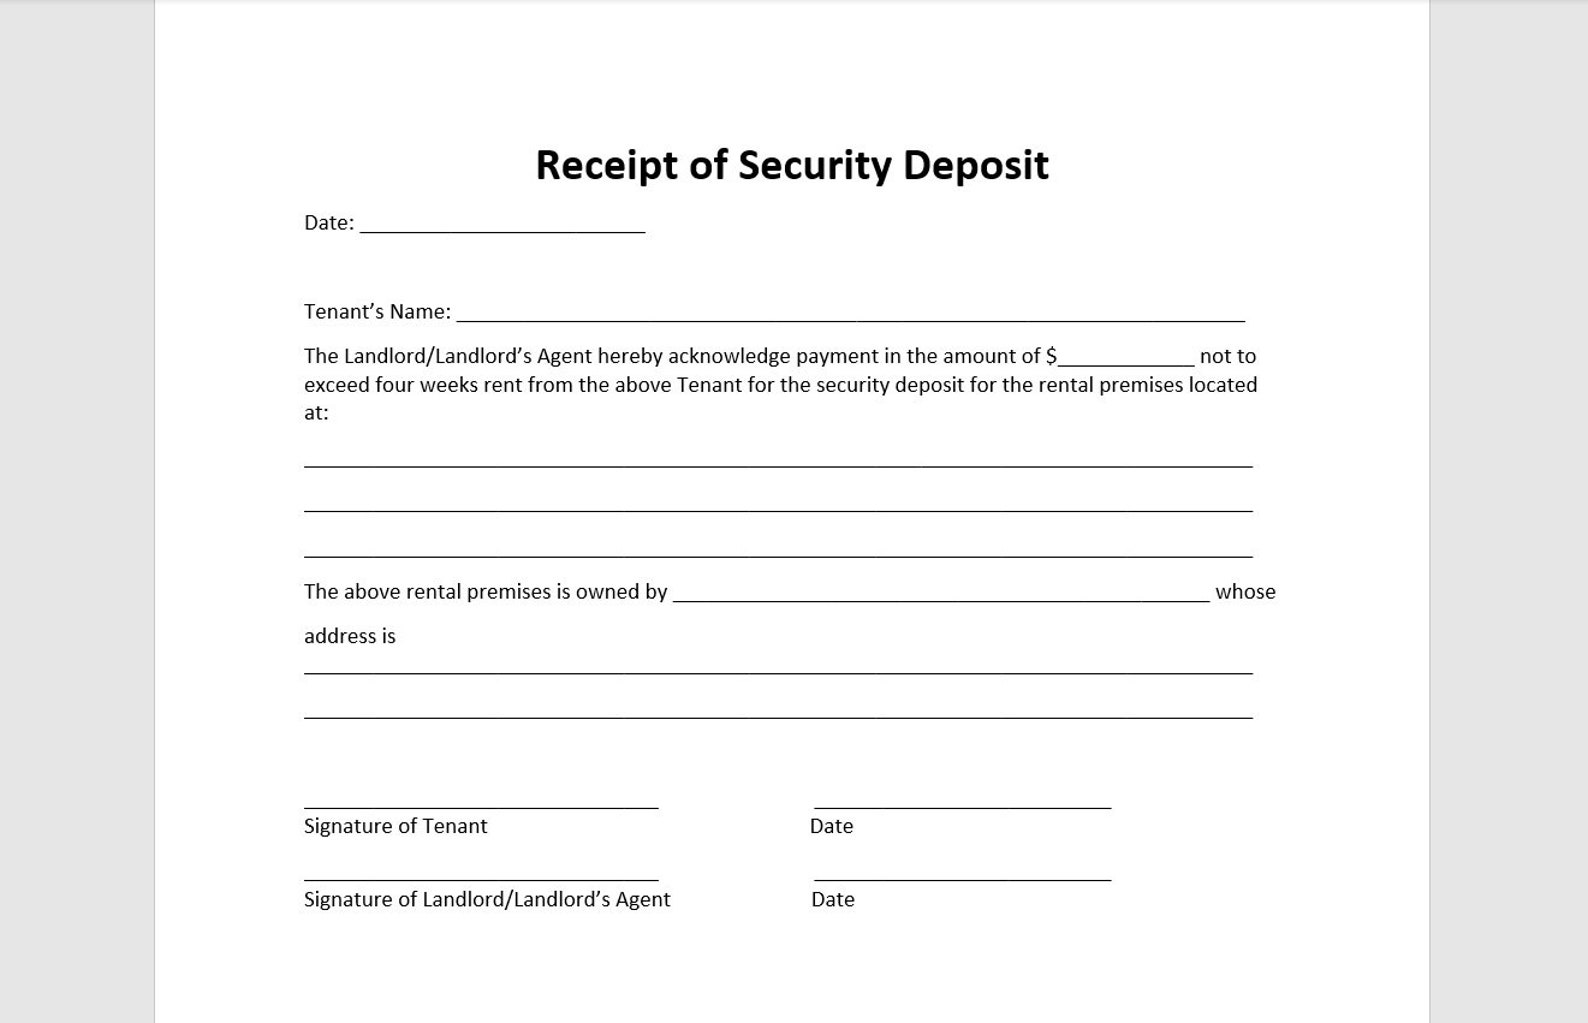 Security Deposit Receipt Form Template, Security Deposit Receipt Form ...